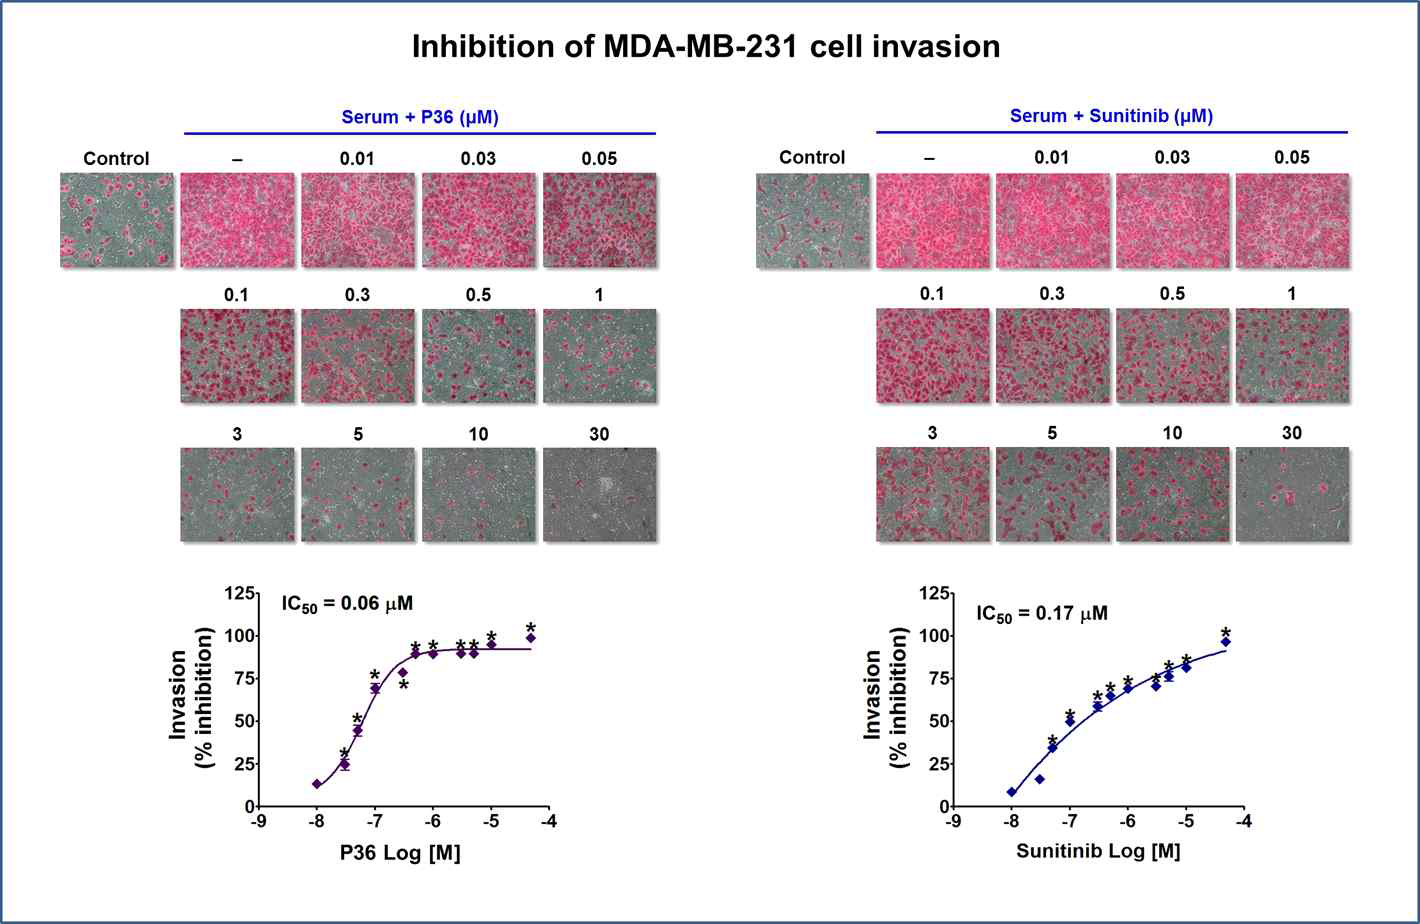 P36 화합물의 전이성 유방암세포(MDA-MB-231) 침윤억제시험 결과